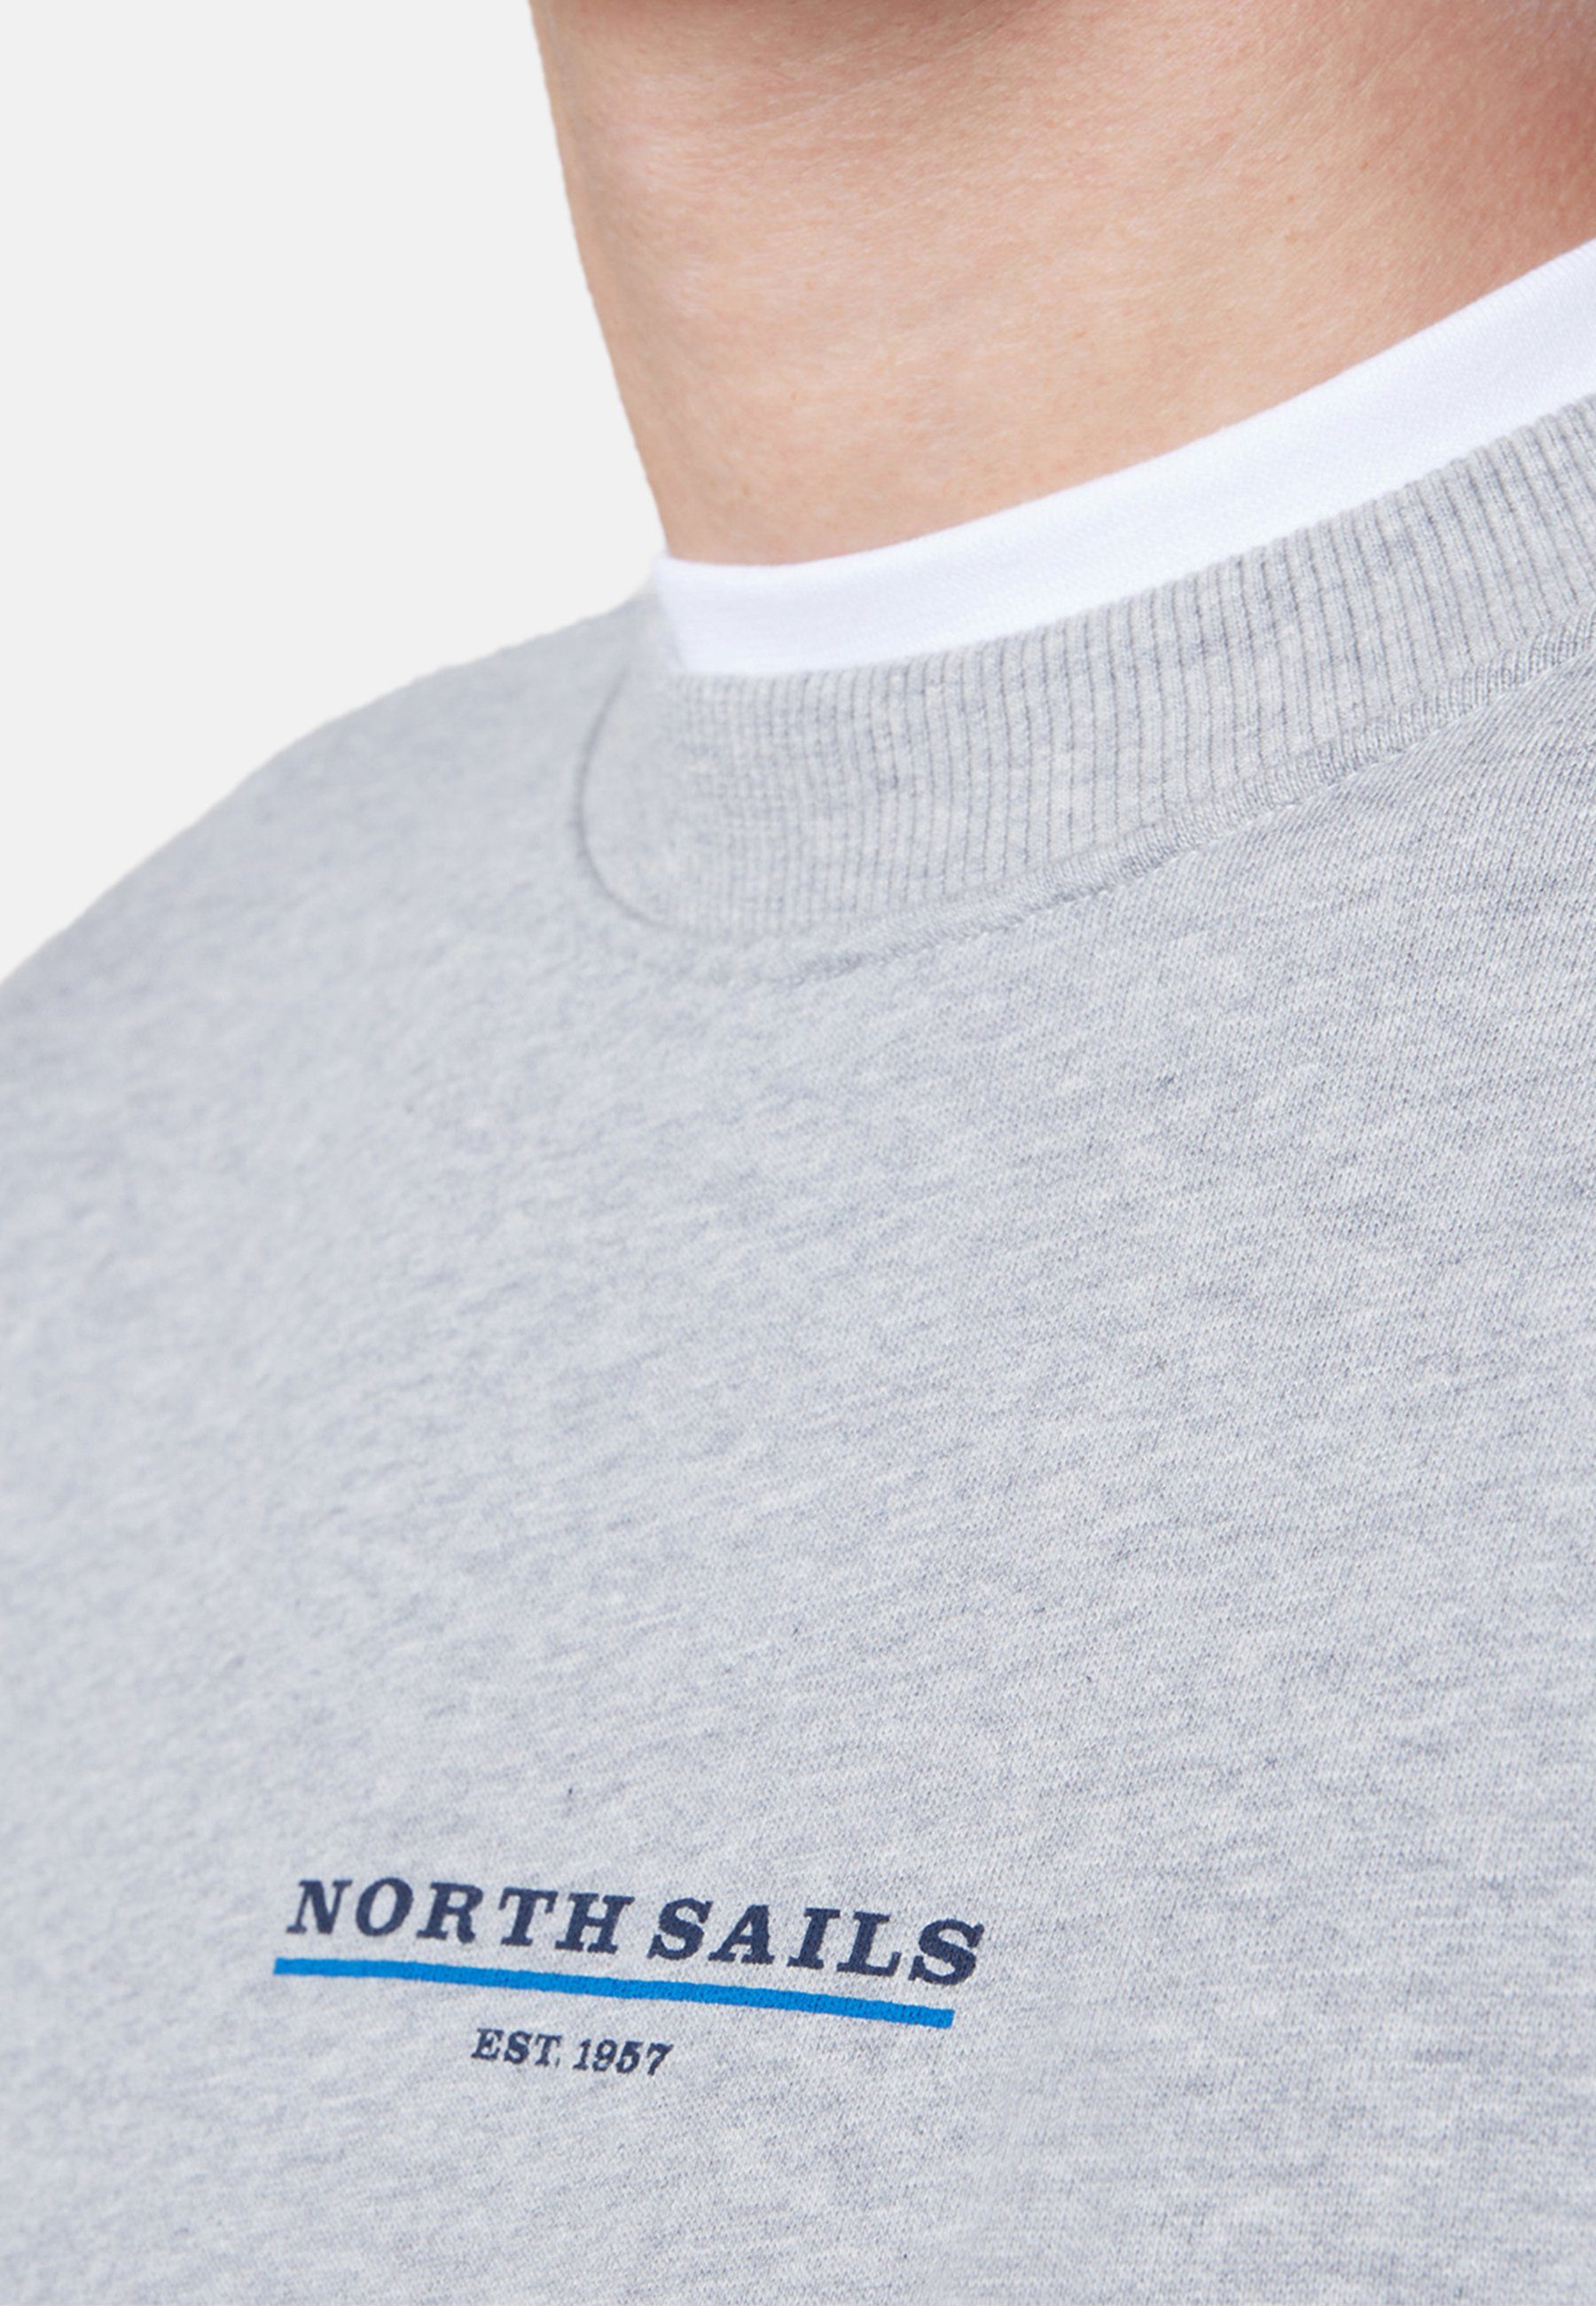 North Sails Brust-Print grey mit Sweatshirt Fleecepullover